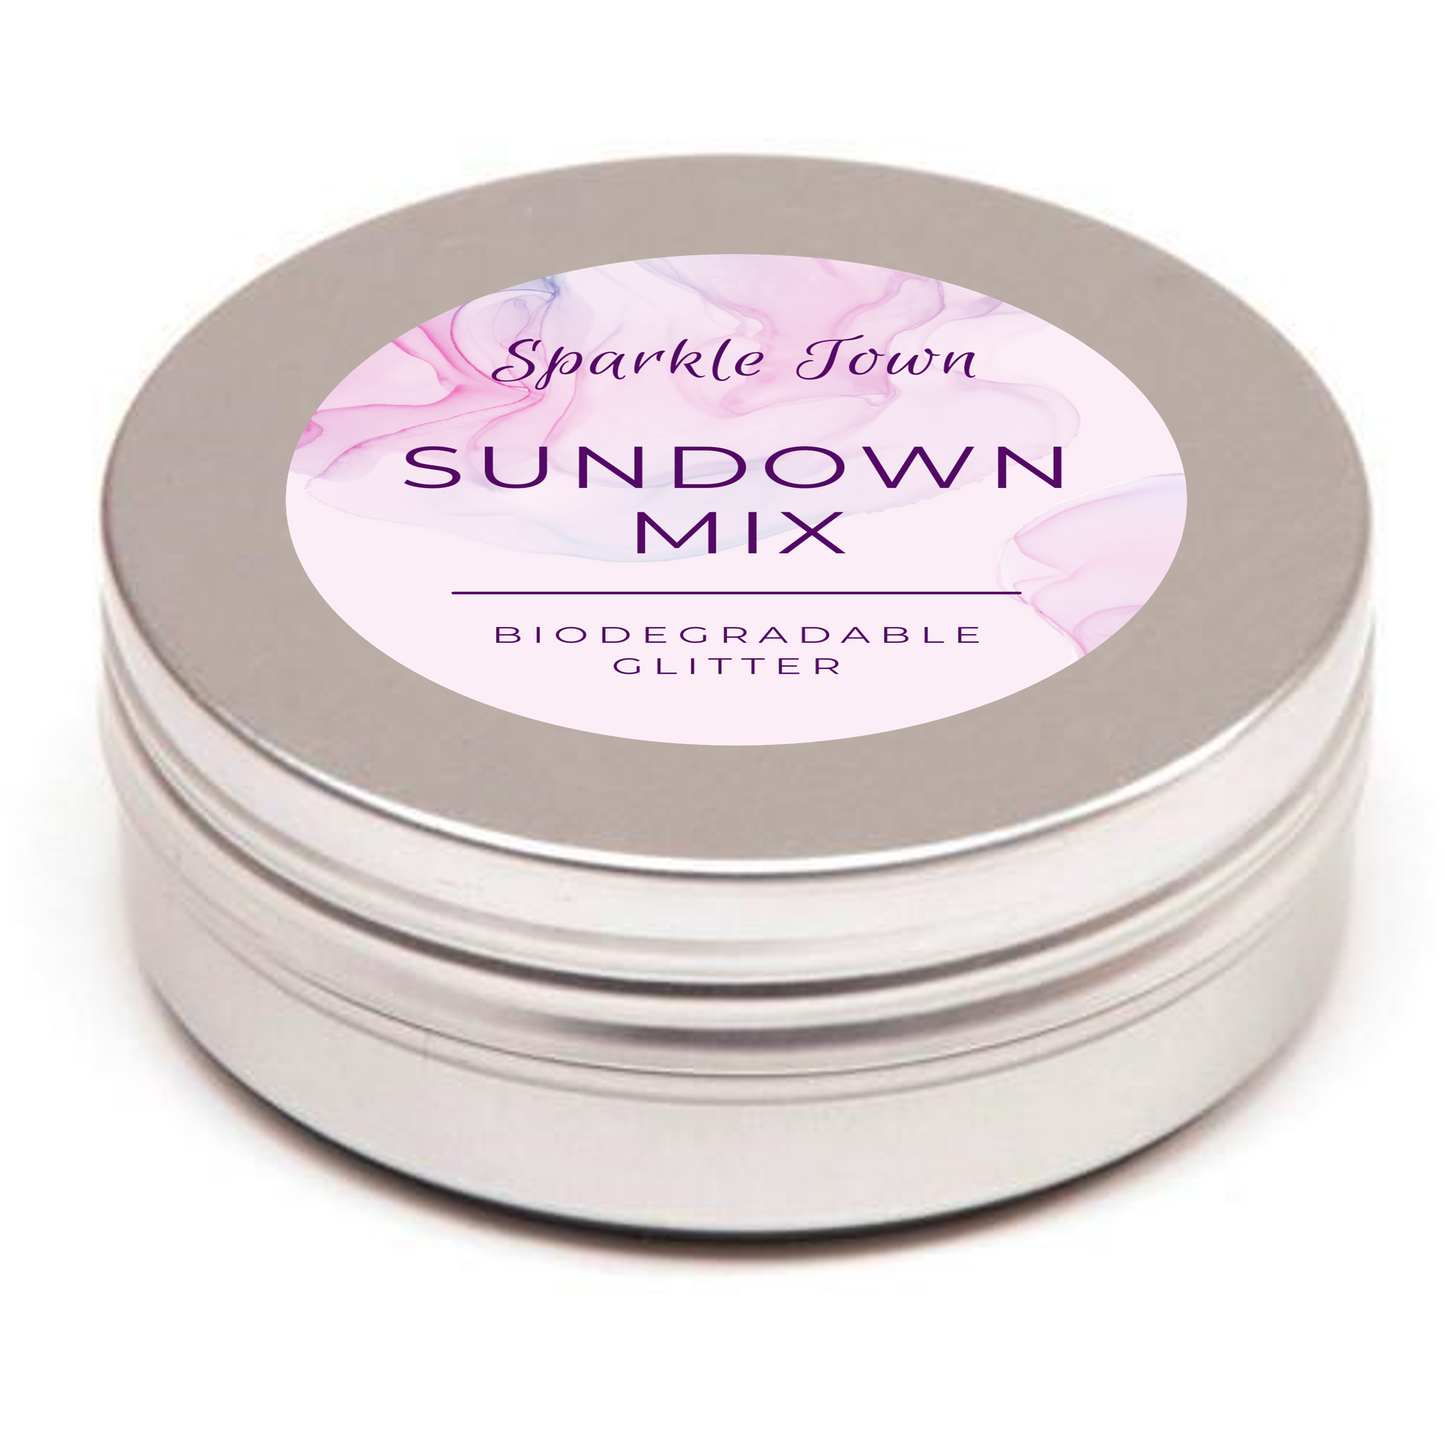 Sundown Mix Biodegradable Glitter